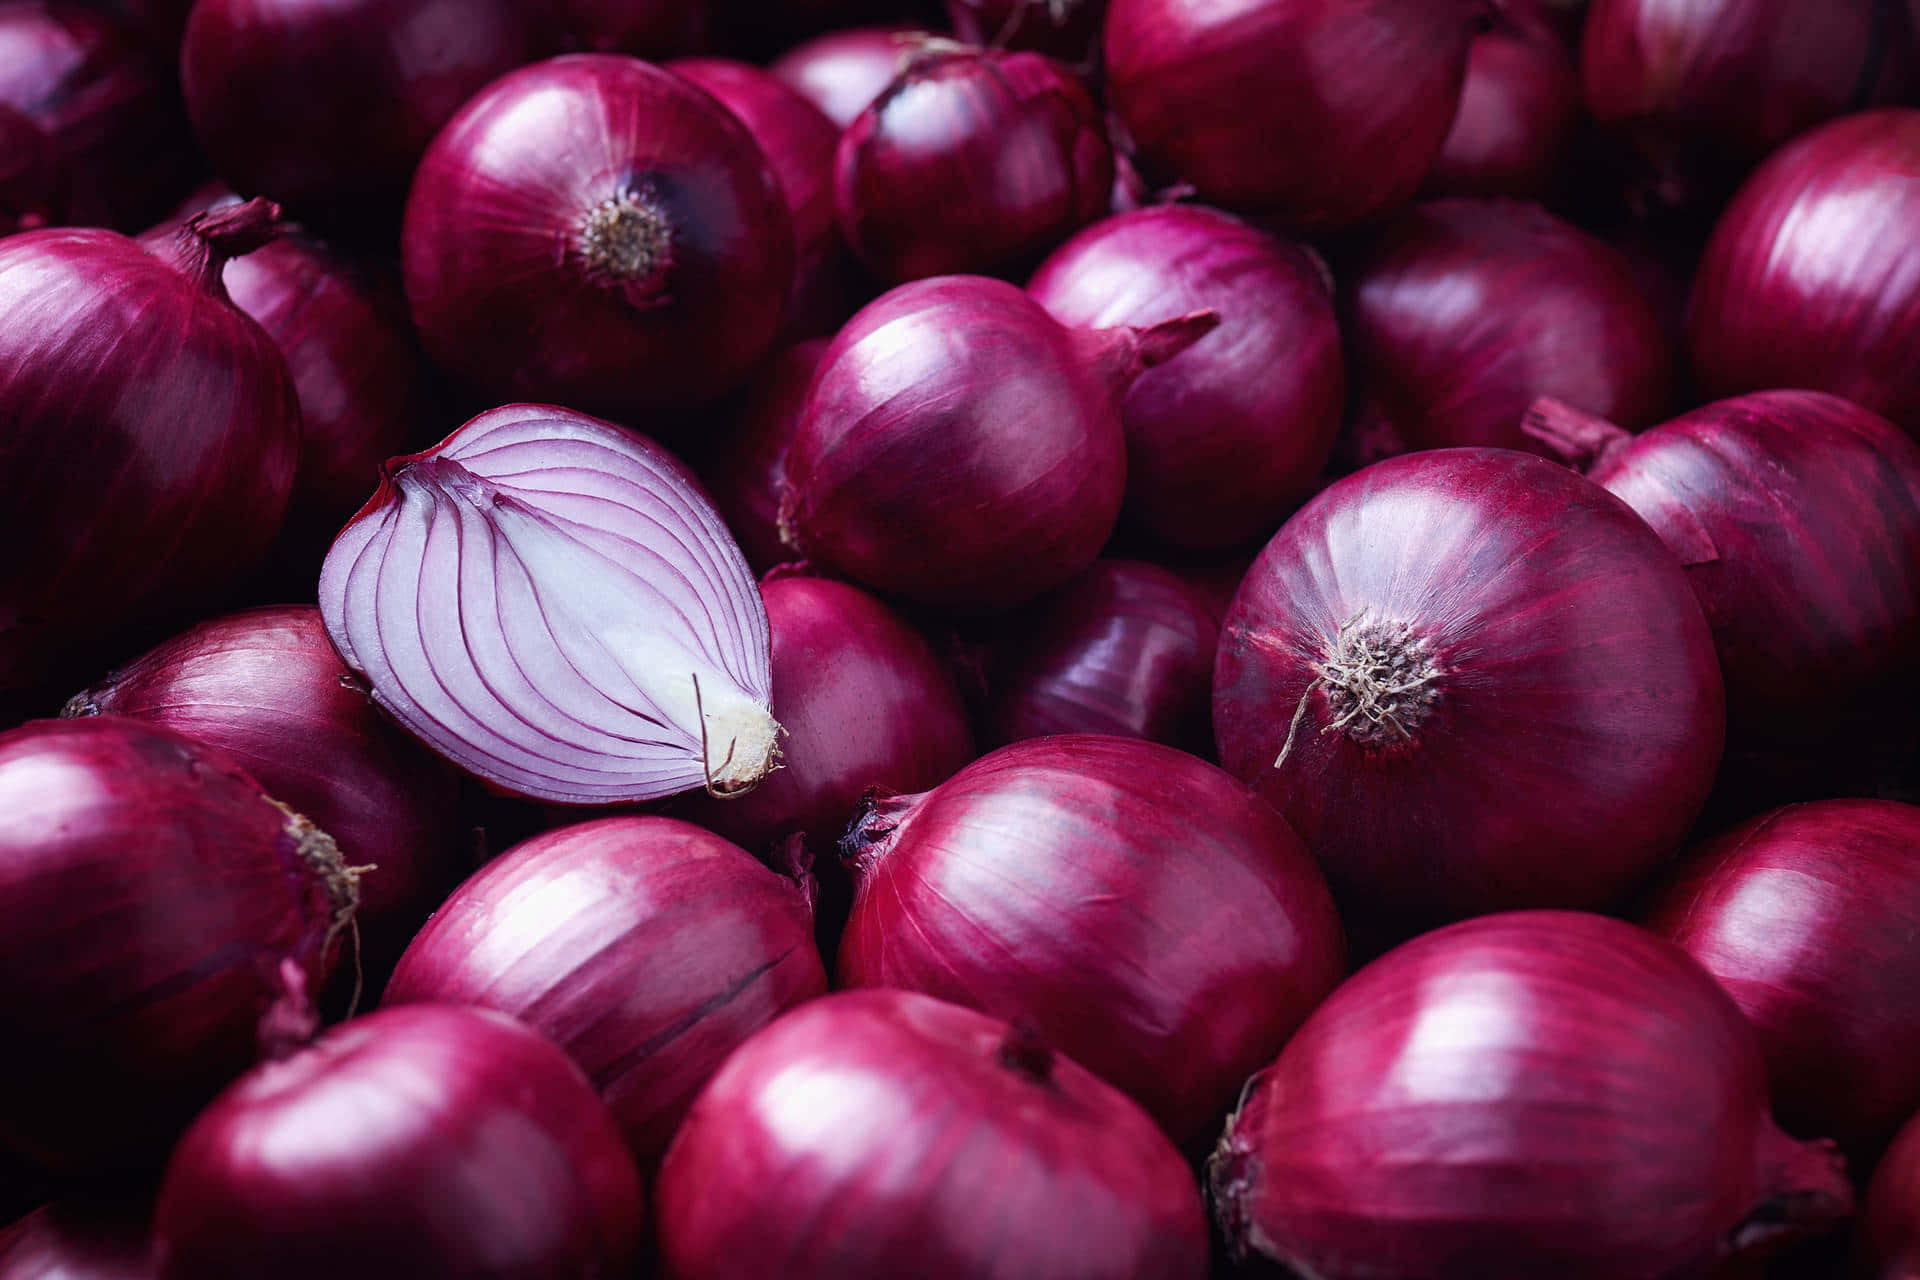 "Plump purple onions add a hint of sweetness to recipes!" Wallpaper